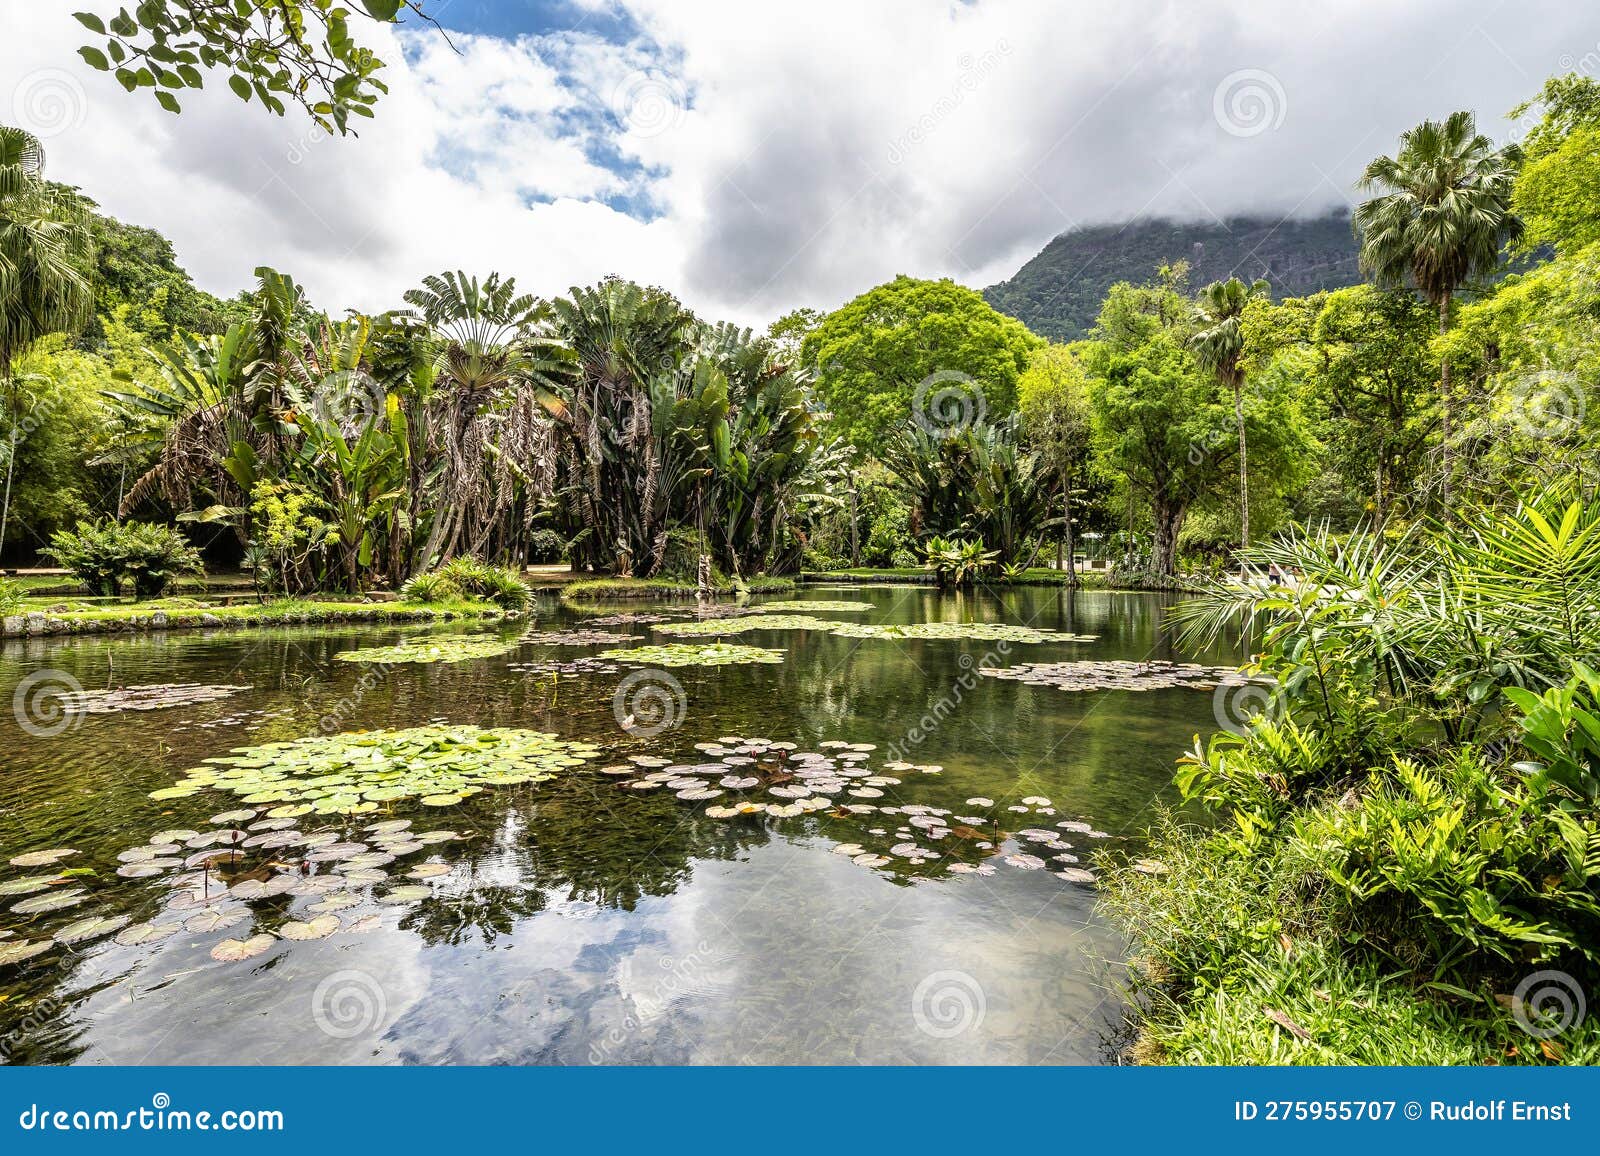 beautiful view of the flora in the botanical garden, jardim botanico of rio de janeiro, brazil